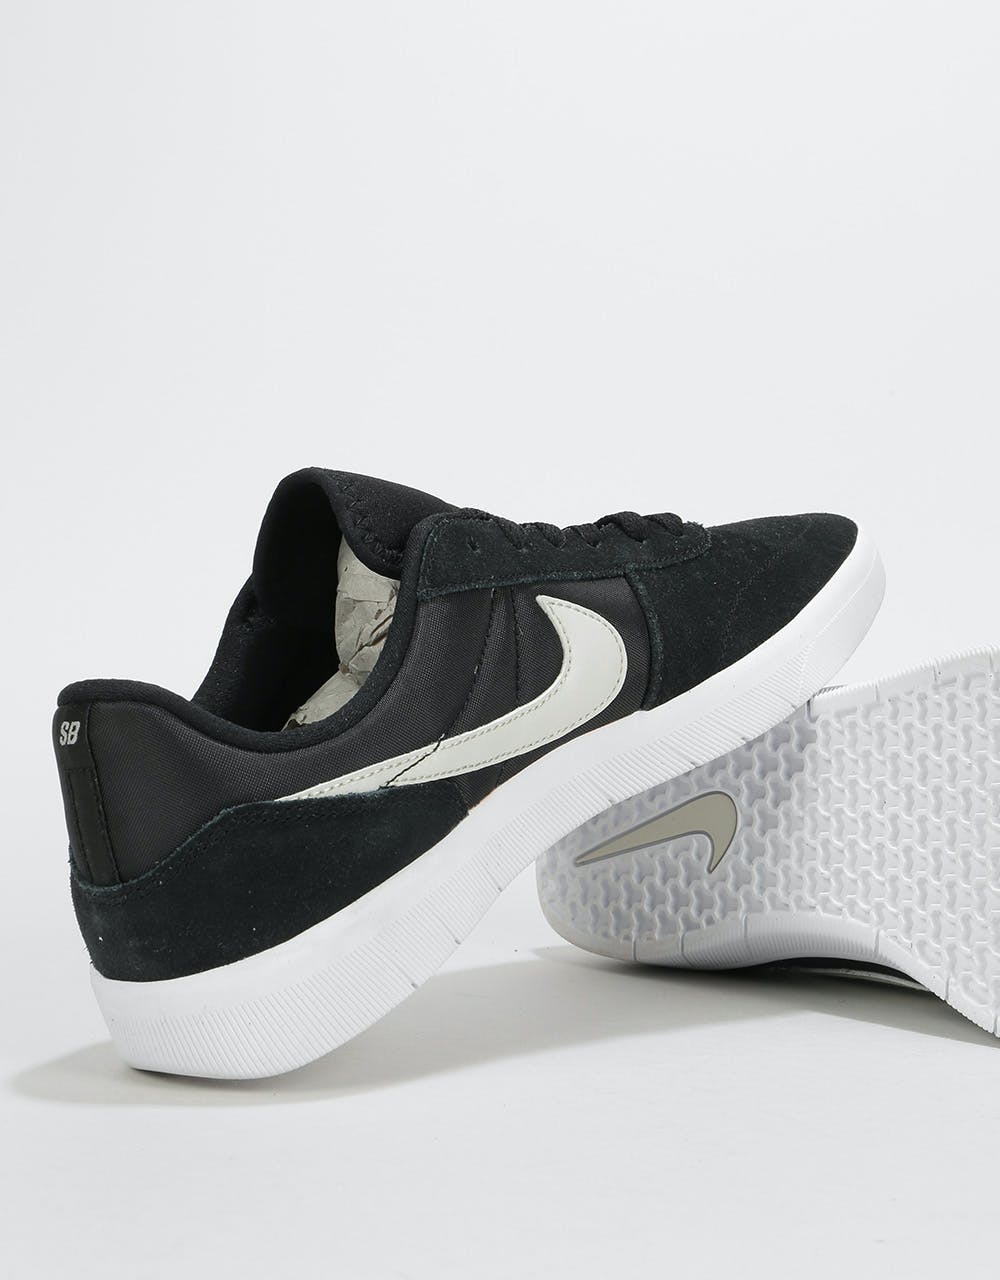 Nike SB Team Classic Skate Shoes - Black/Light Bone-White